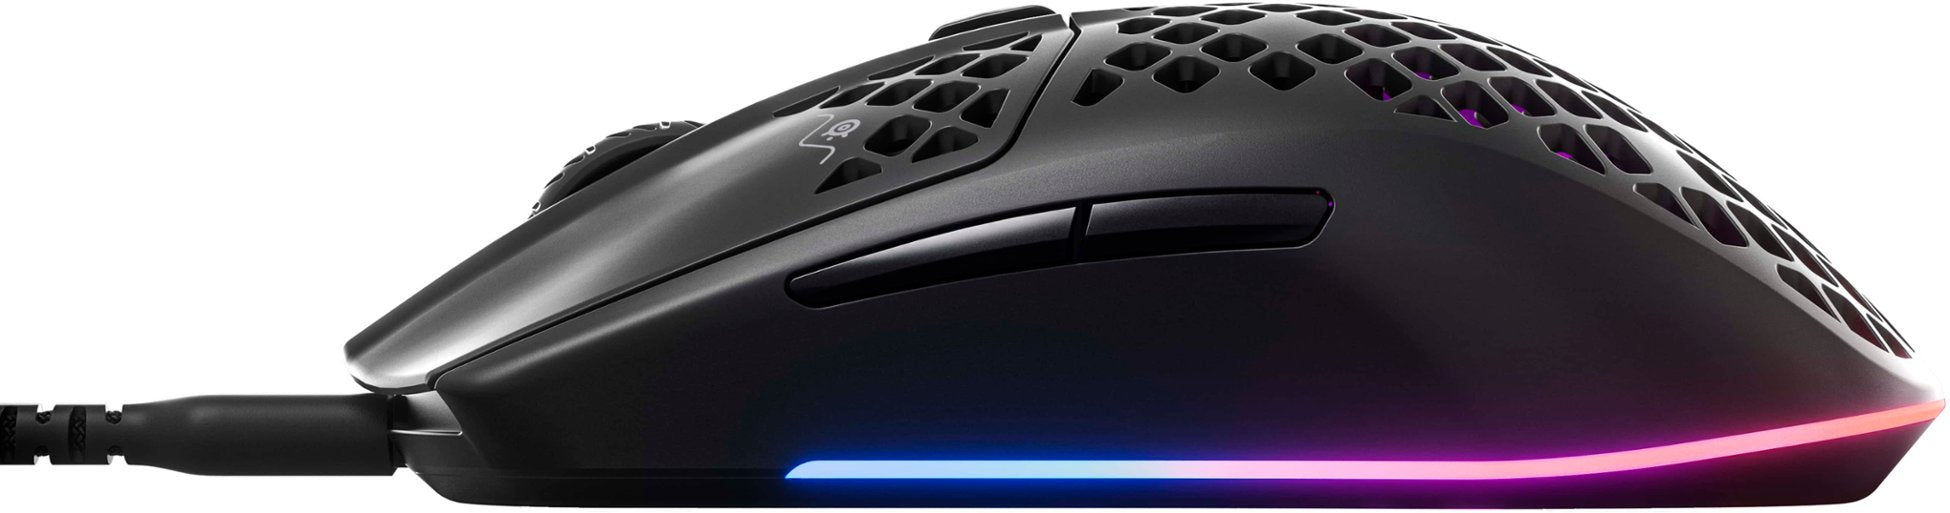 SteelSeries Aerox 3 Light Gaming Mouse 8500 CPI TrueMove Core Optical Sensor (Certified Refurbished)